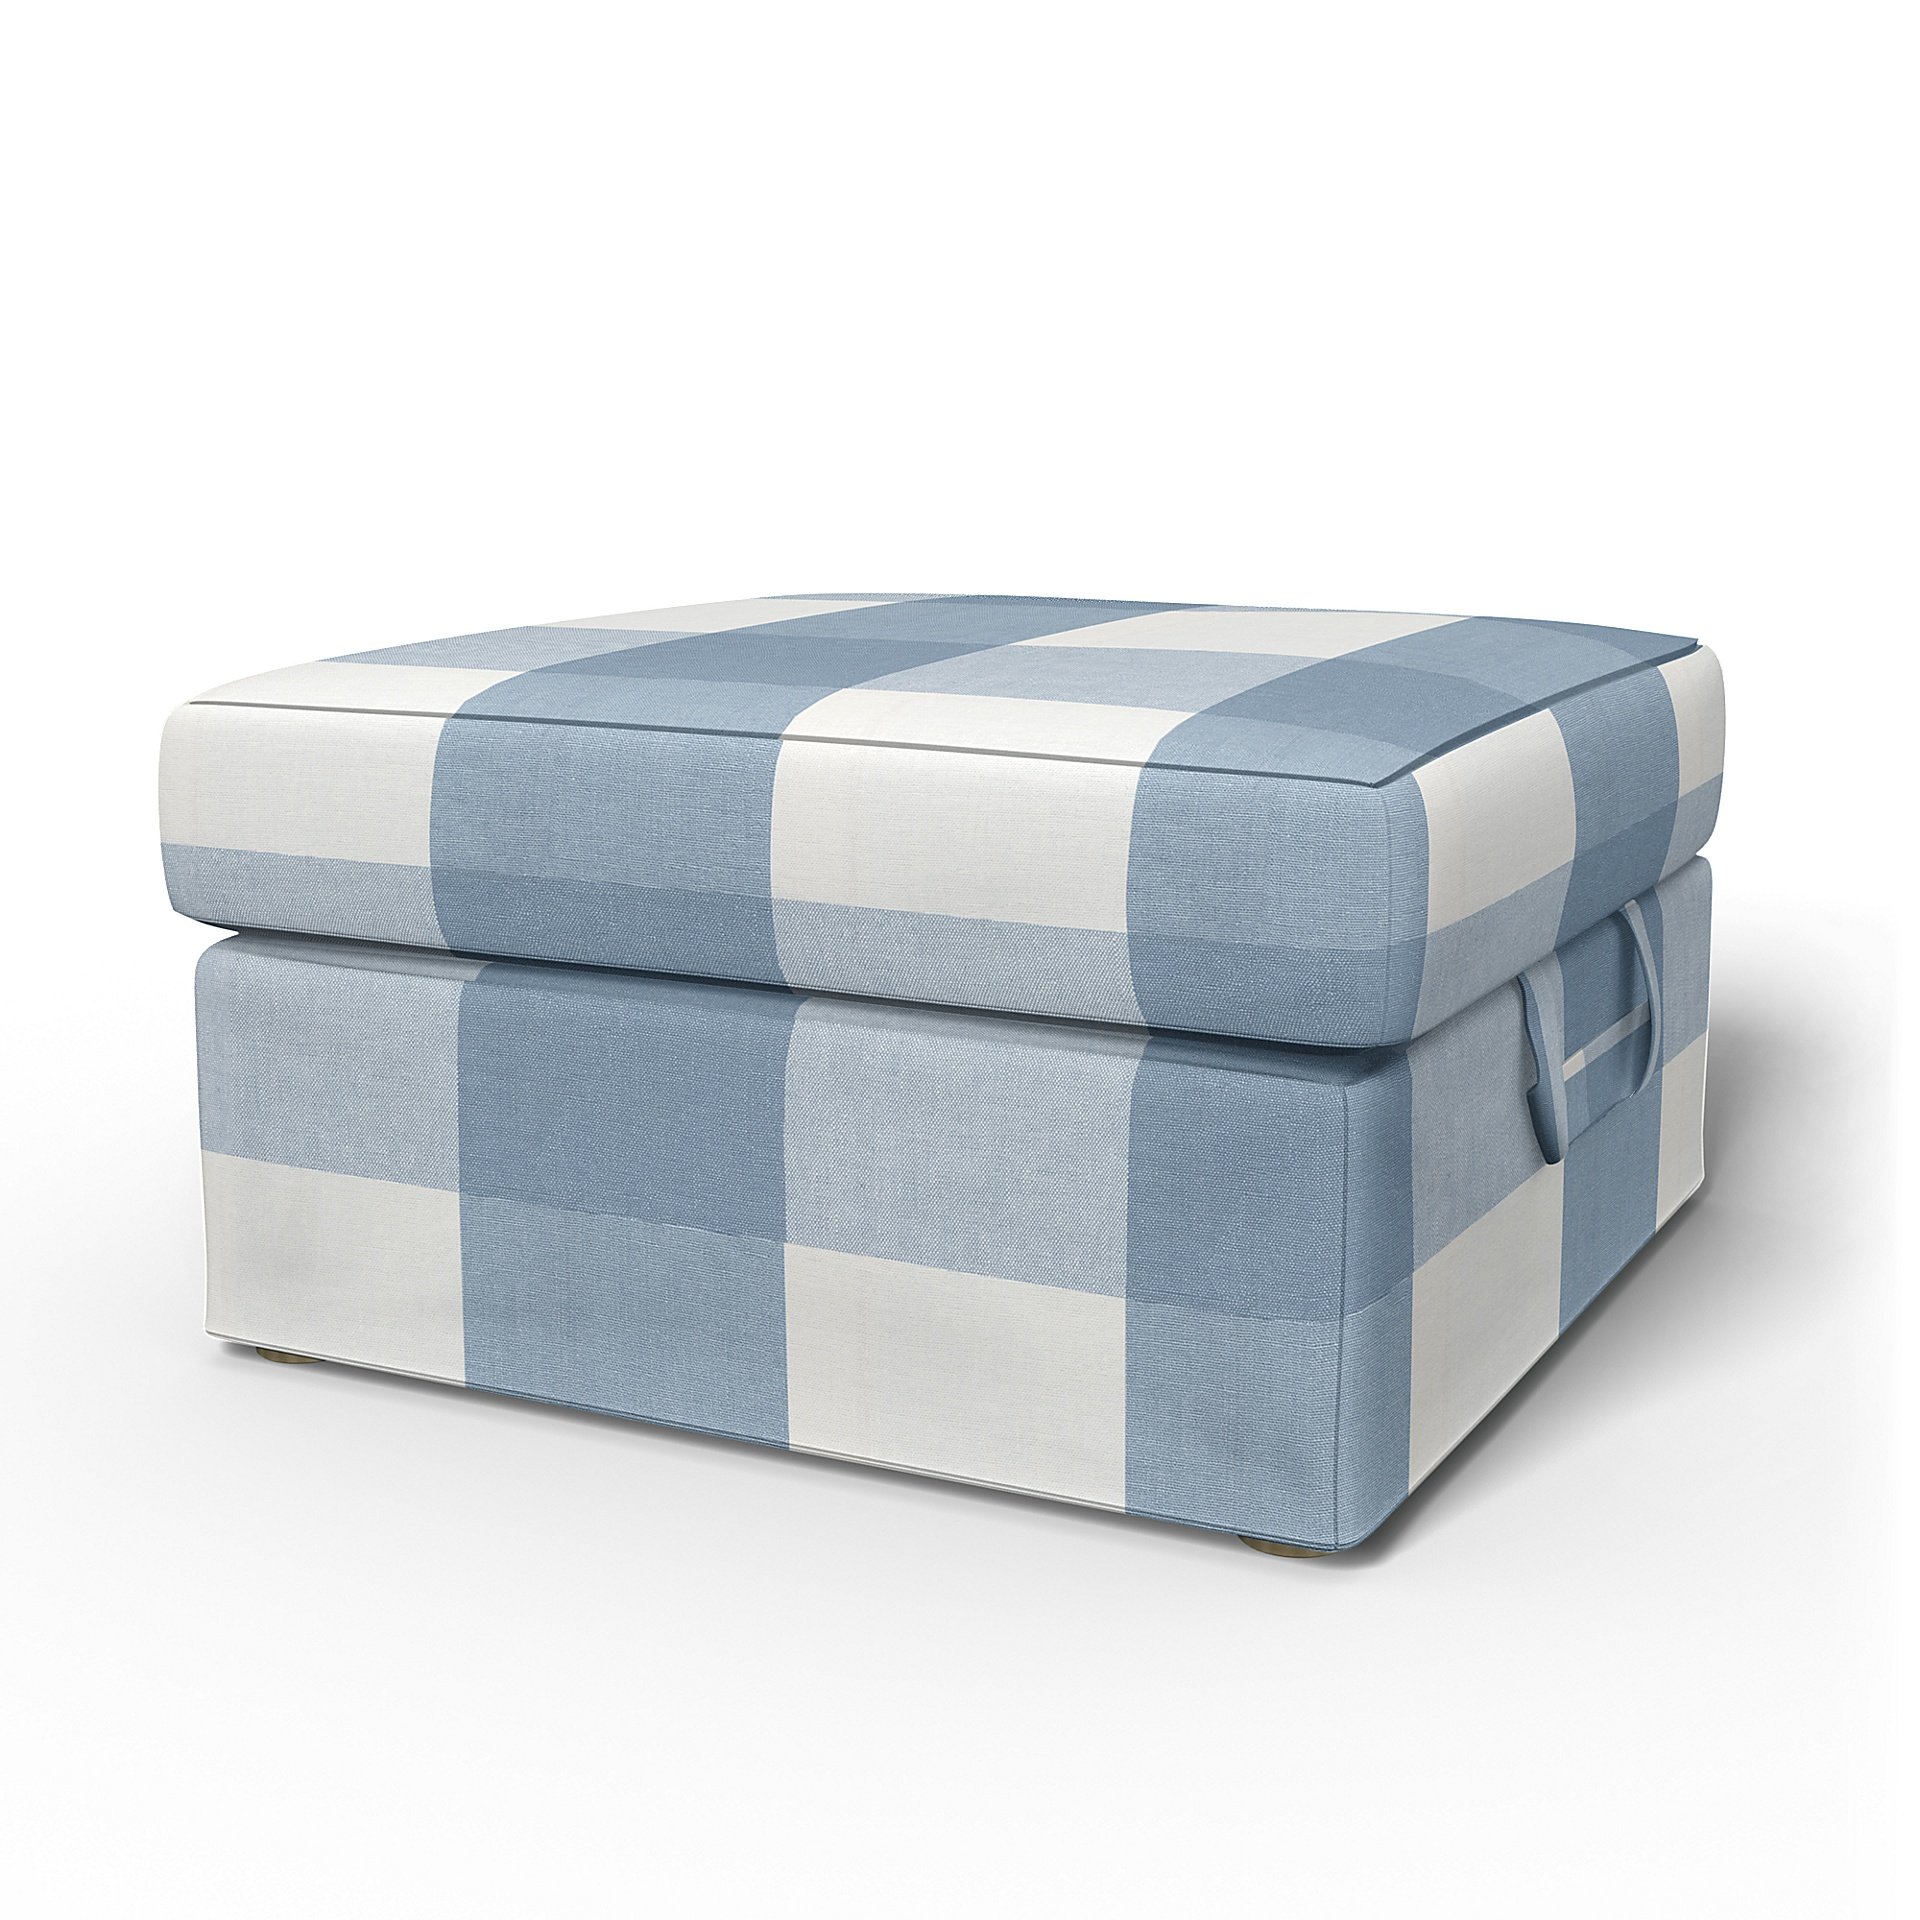 IKEA - Tomelilla Foto Footstool Cover, Sky Blue, Linen - Bemz